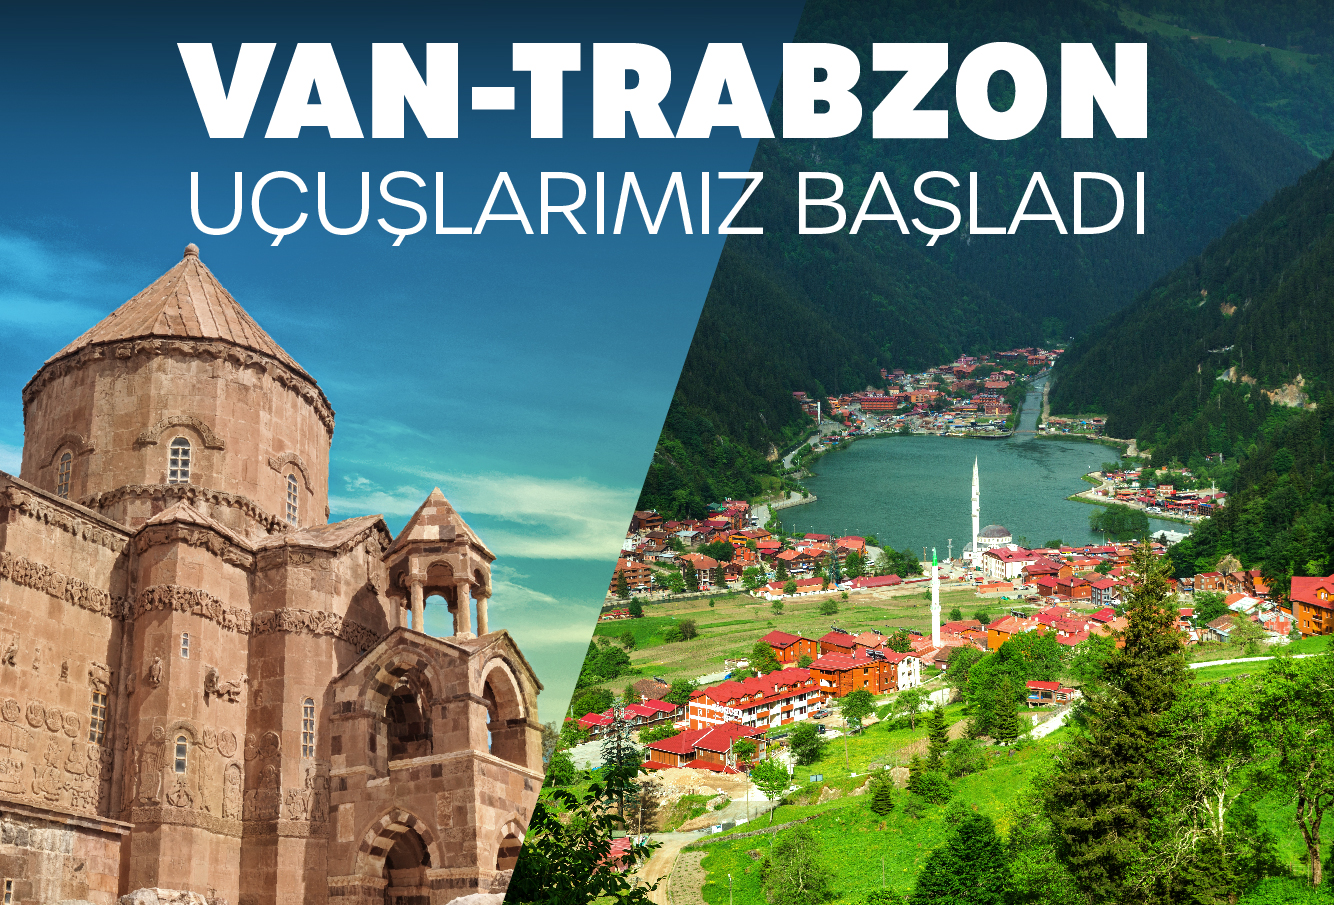 Van-Trabzon hattımız açıldı!